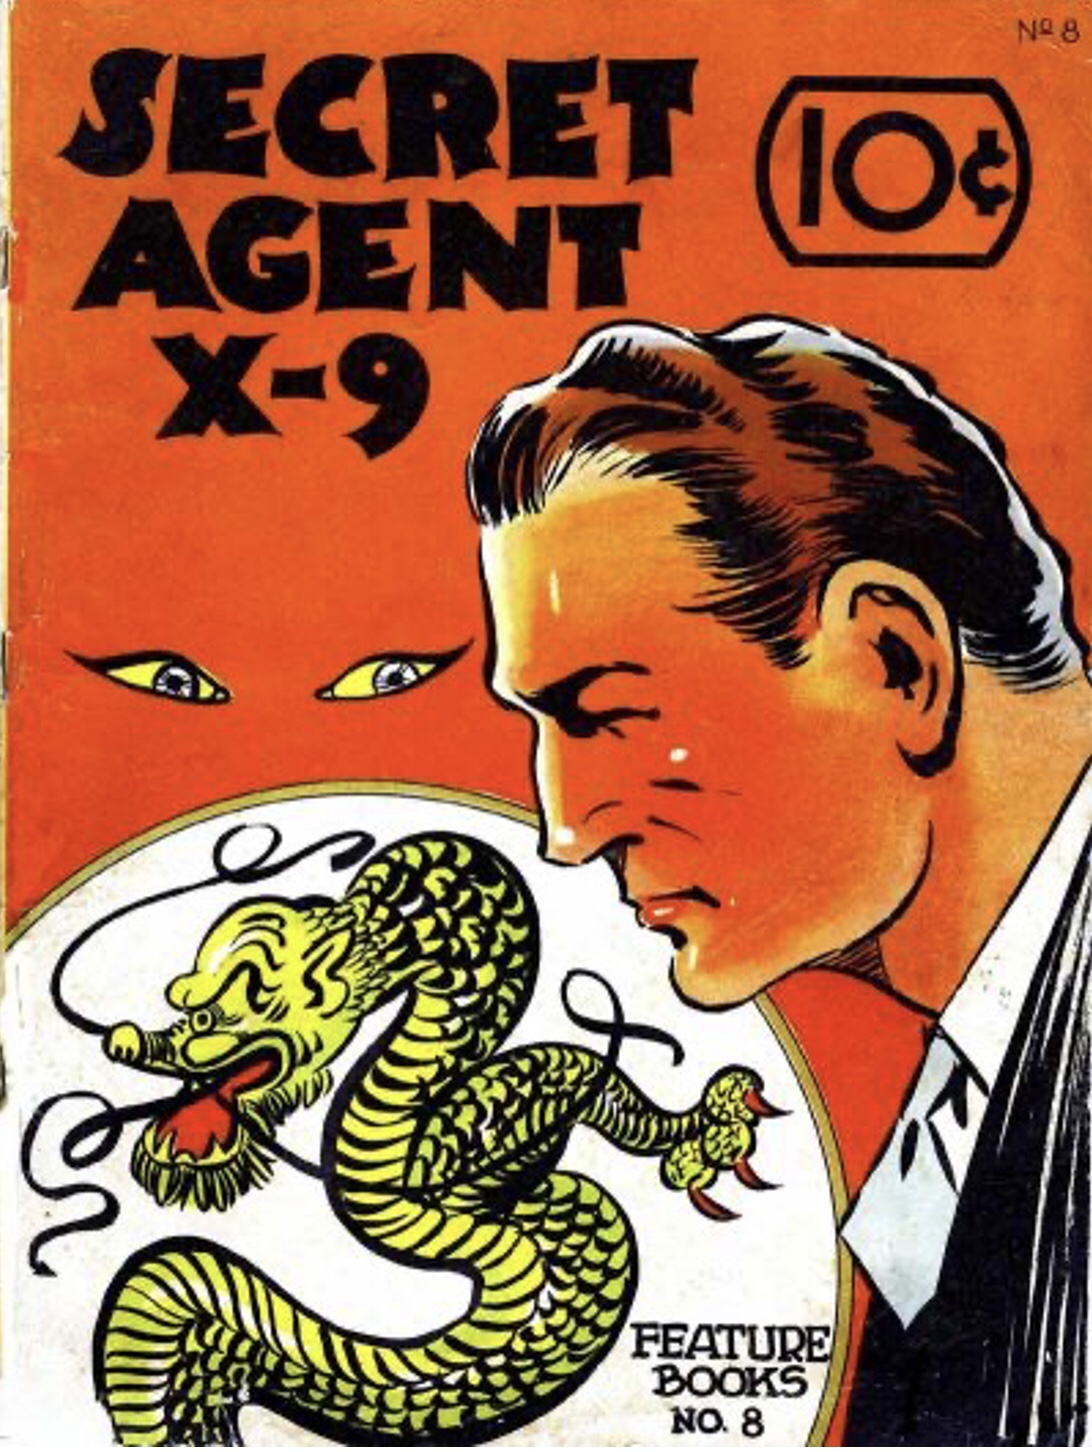 Omslag till Feature Books #8 innehållande Secret Agent X-9. ©McKay